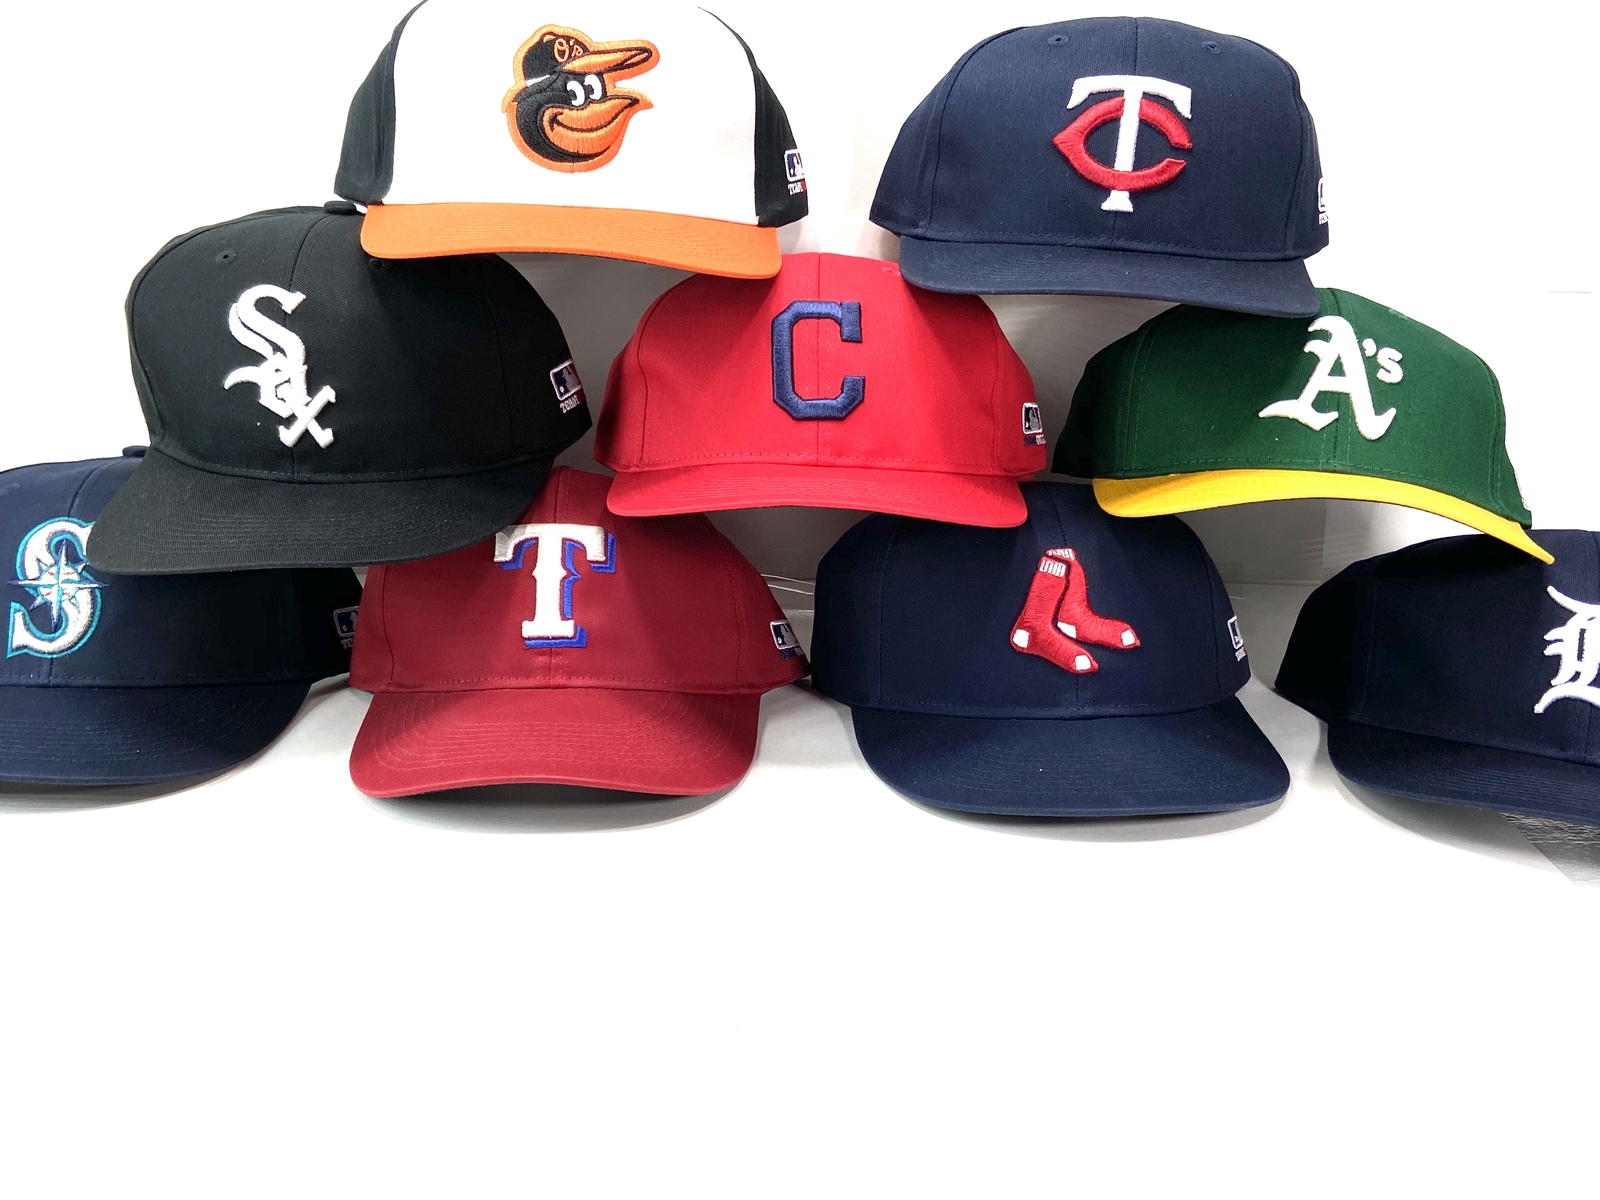 MLB American League Replica M-300 Caps (New) by Outdoor Cap